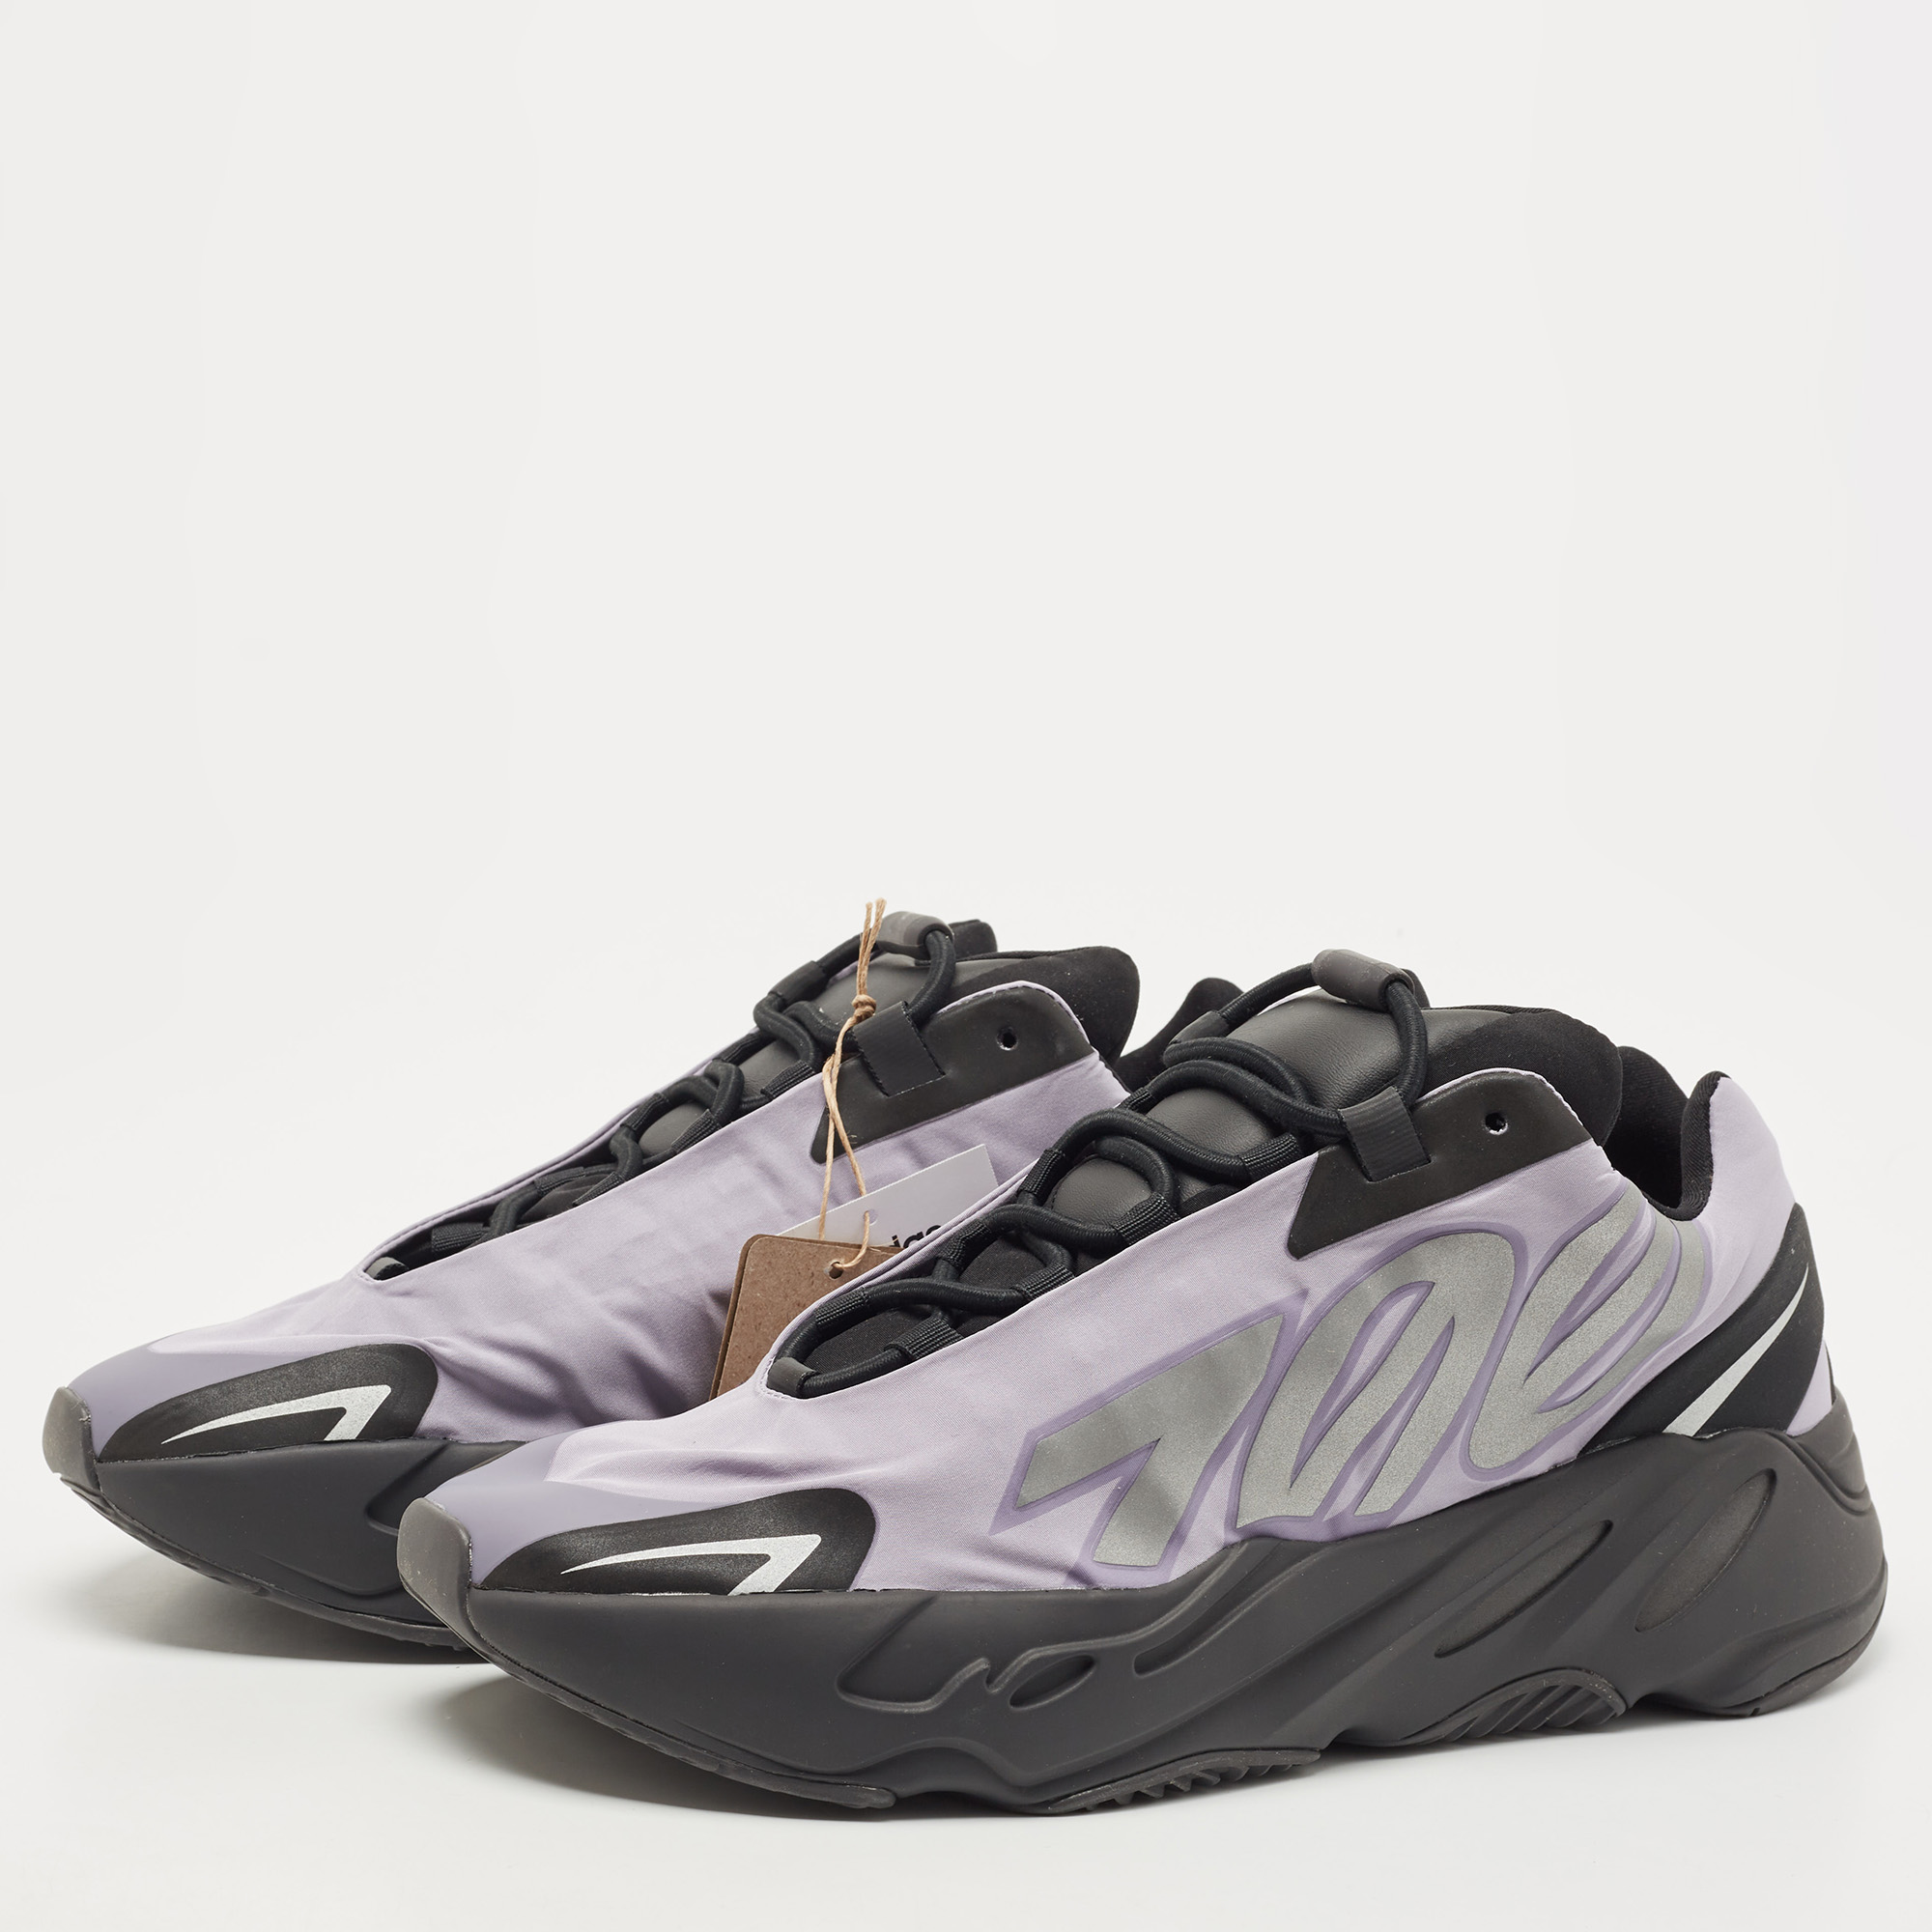 

Yeezy x Adidas Geode/Black Nylon Boost 700 MNVN Low Top Sneakers Size 44 2/3